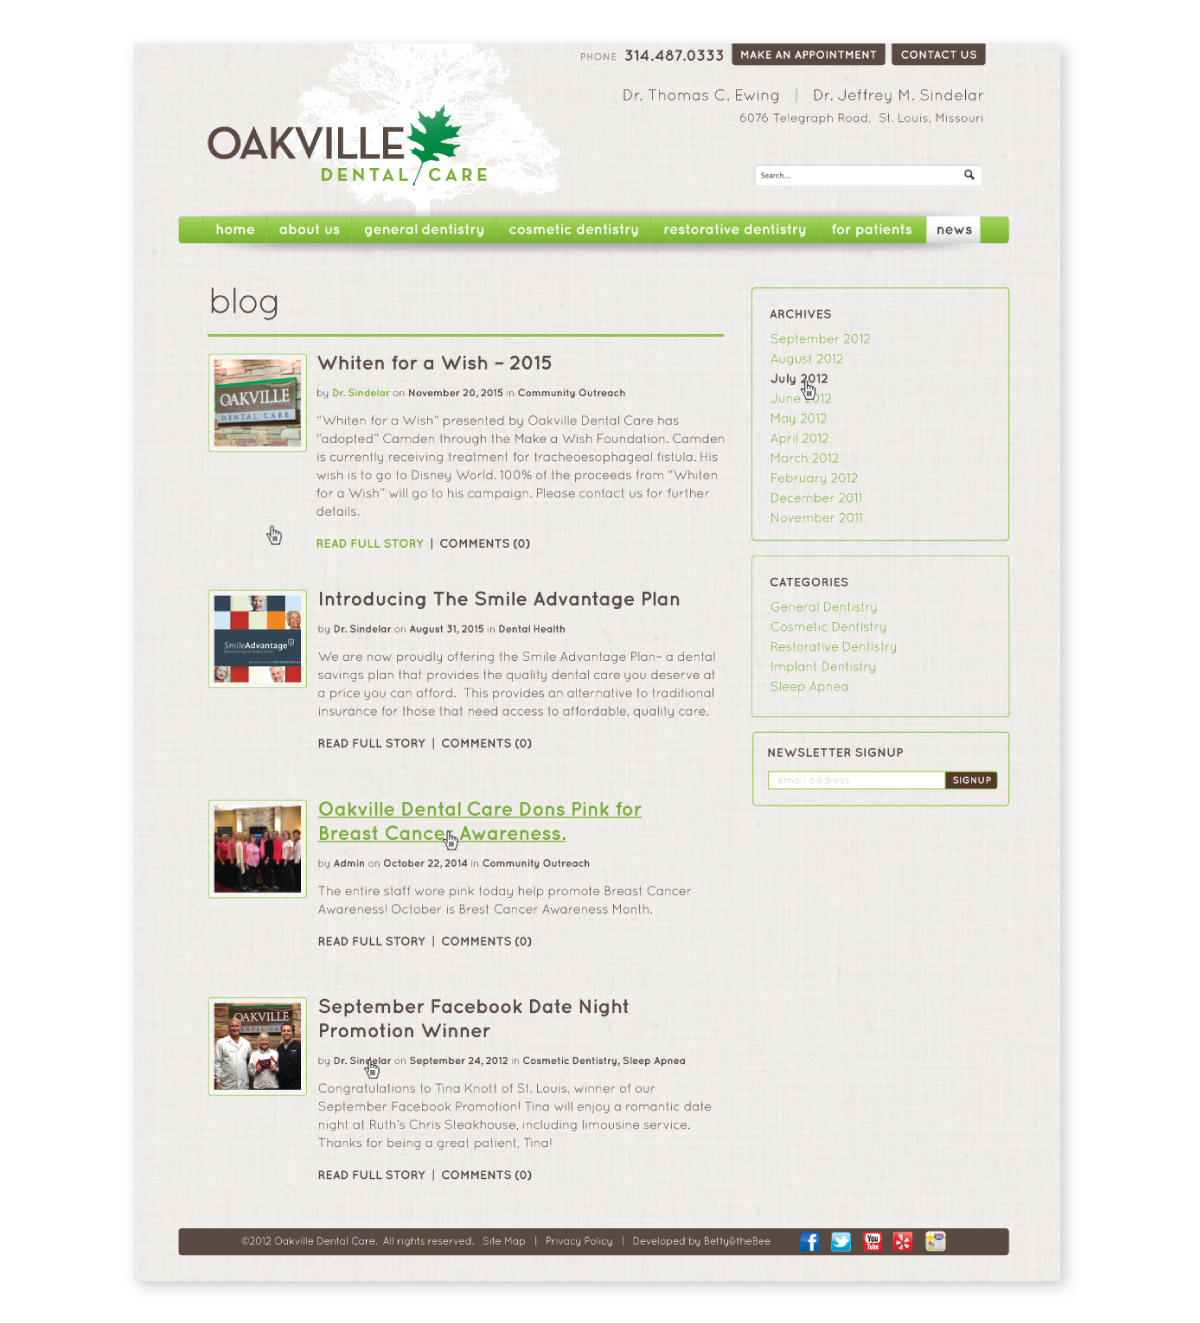 Oakville website interior page